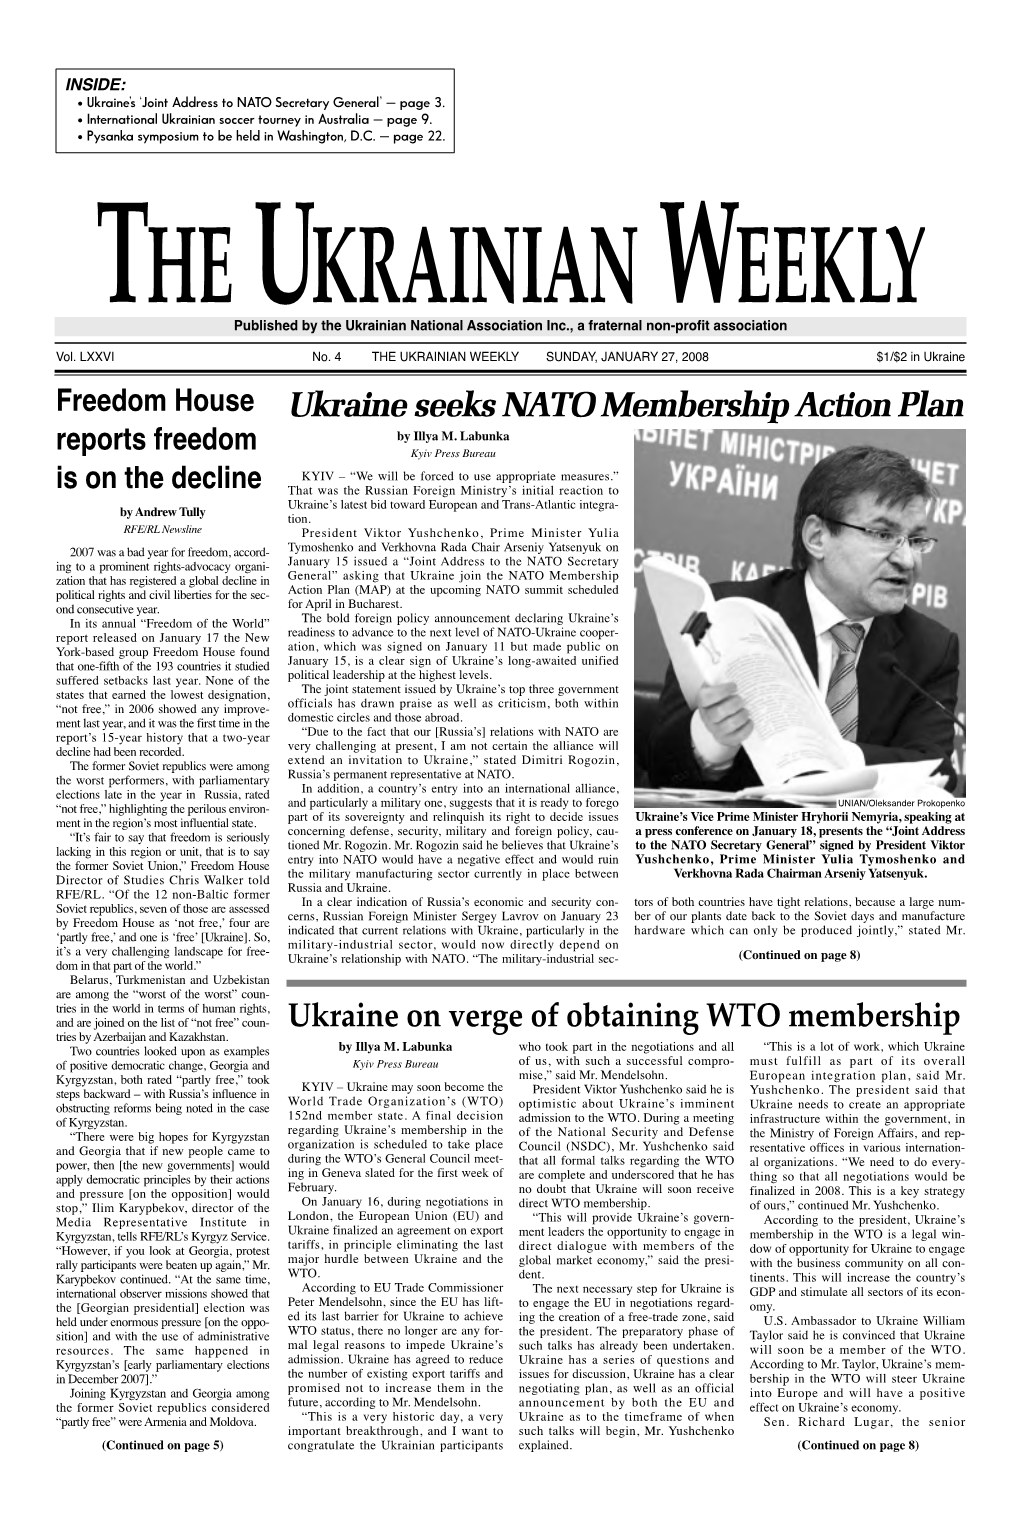 The Ukrainian Weekly 2008, No.4